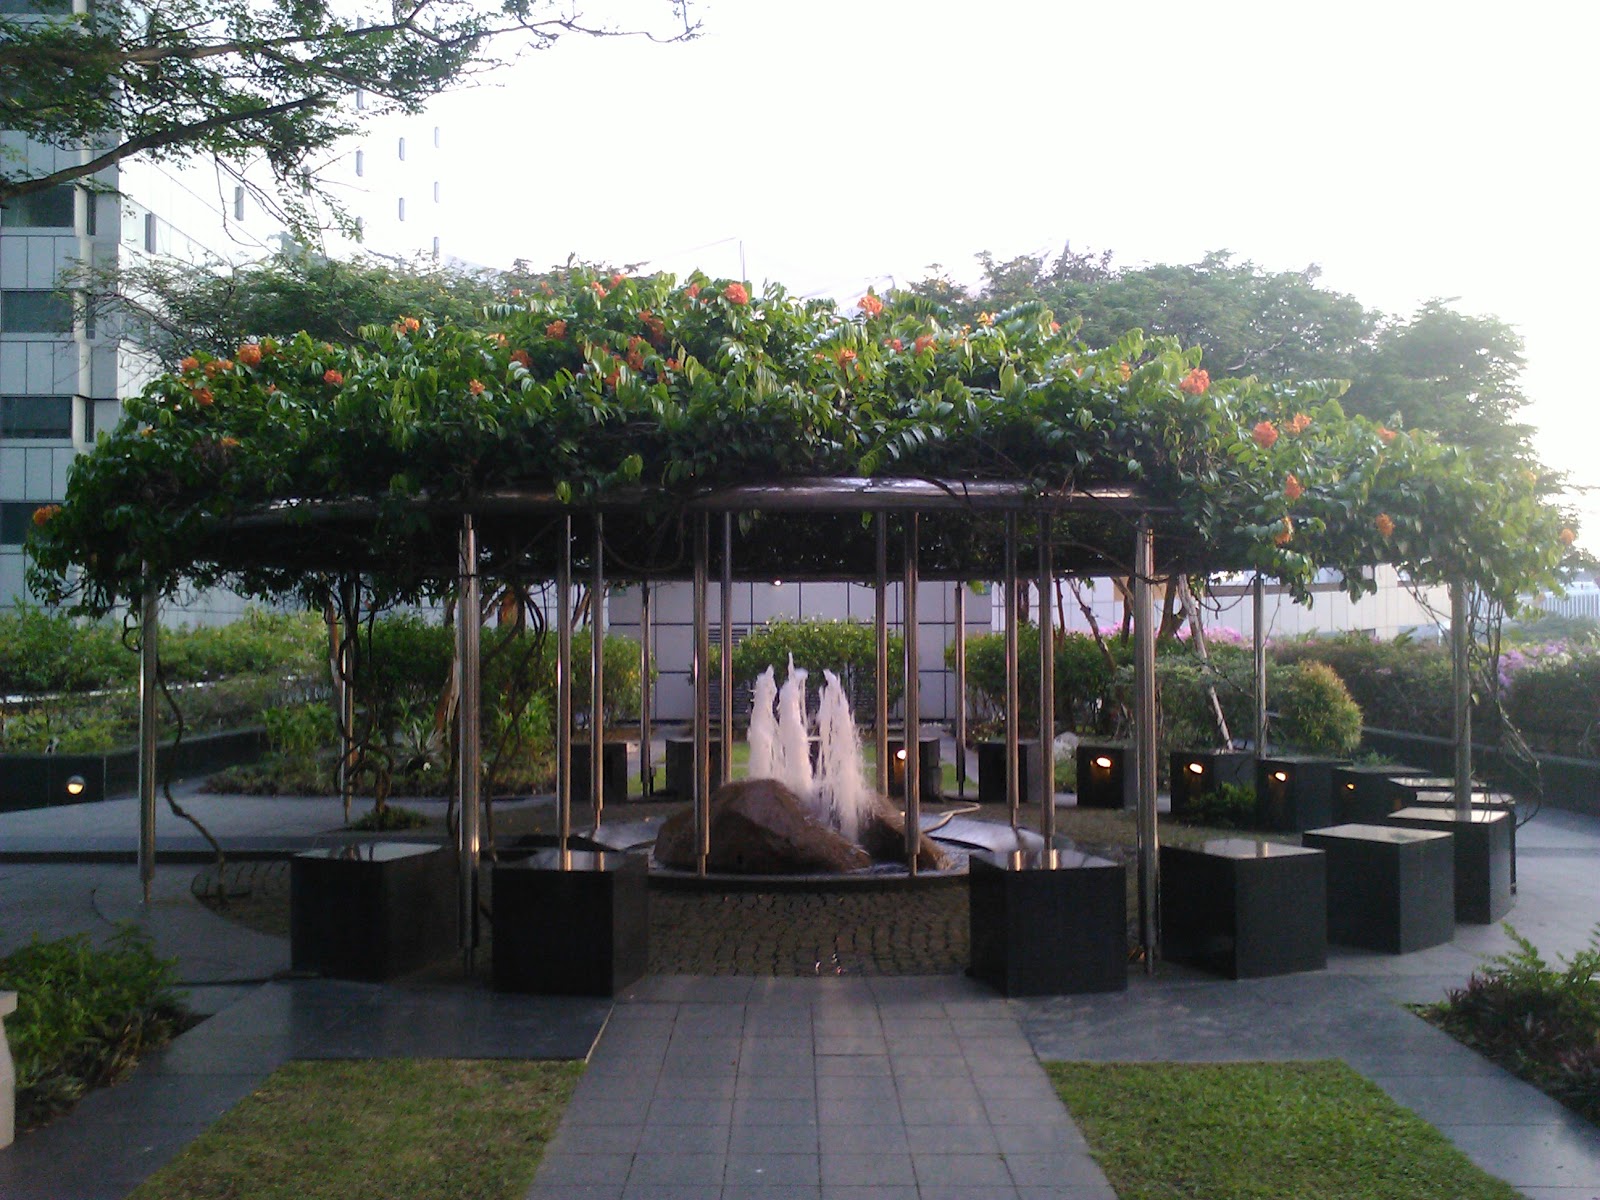 Frenzeelo: 6 Best Rooftop Gardens to Visit in Singapore (VIDEO) (UPDATE)